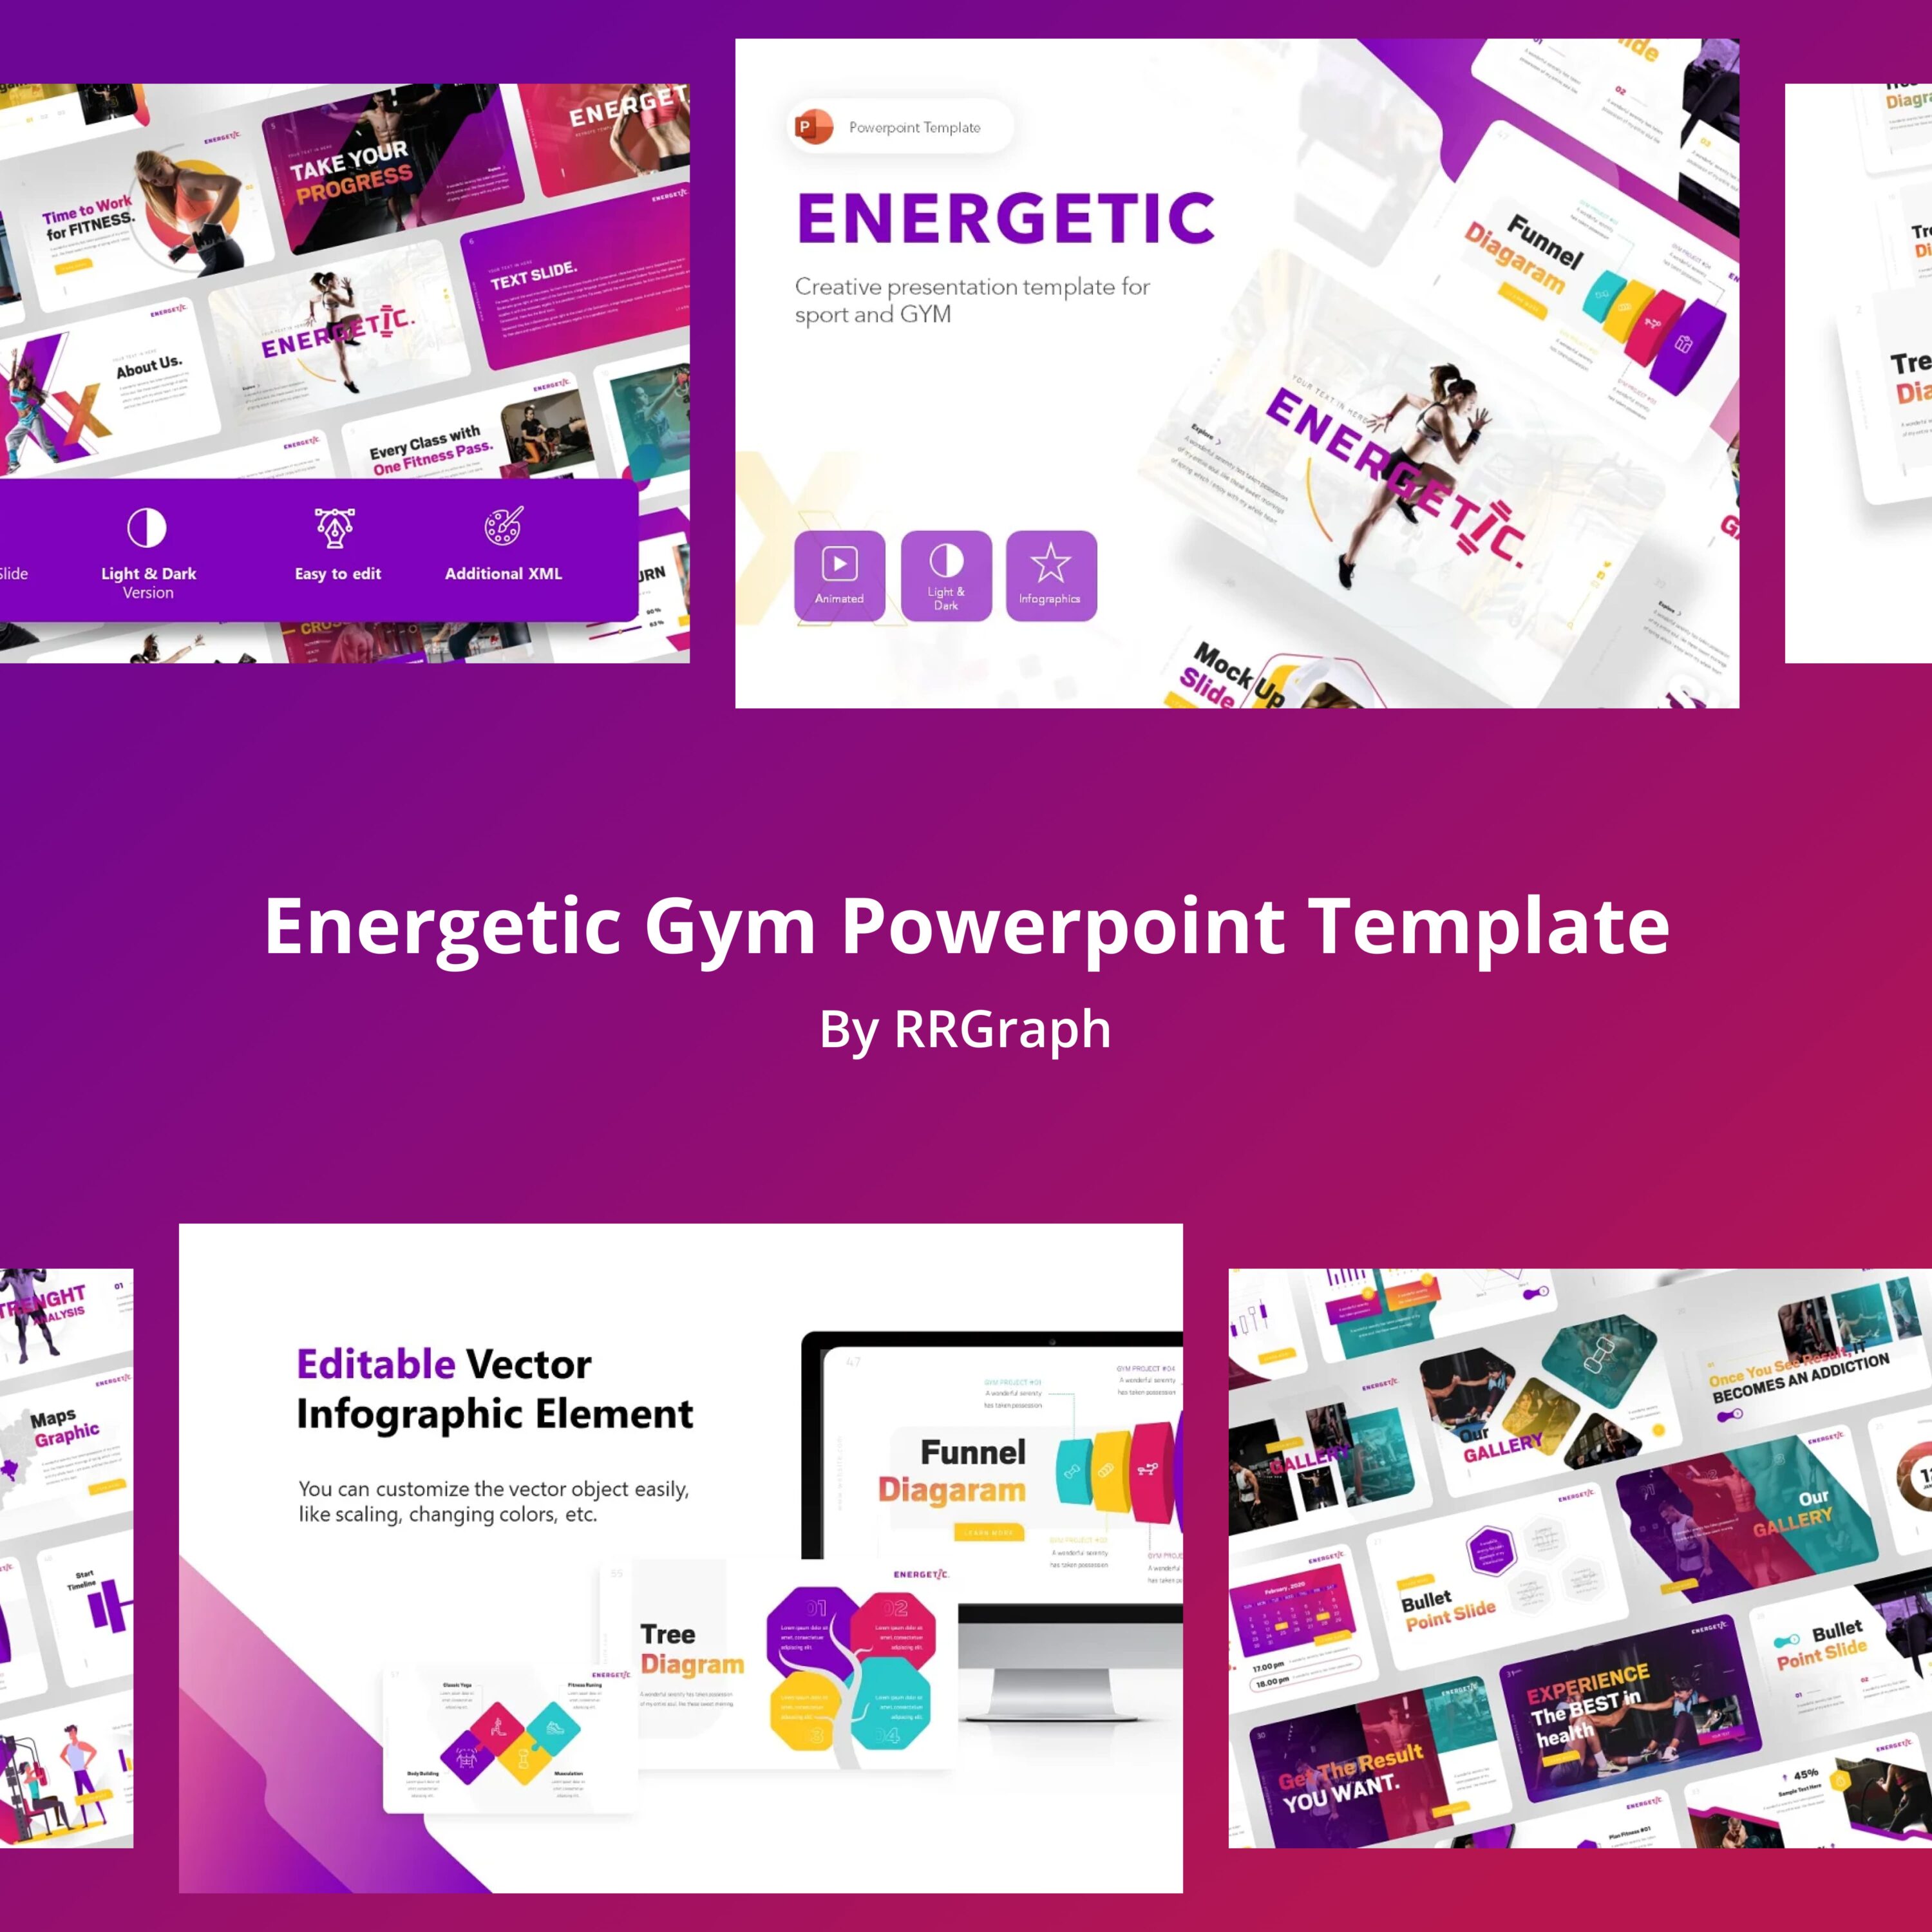 Energetic Gym Powerpoint Template.